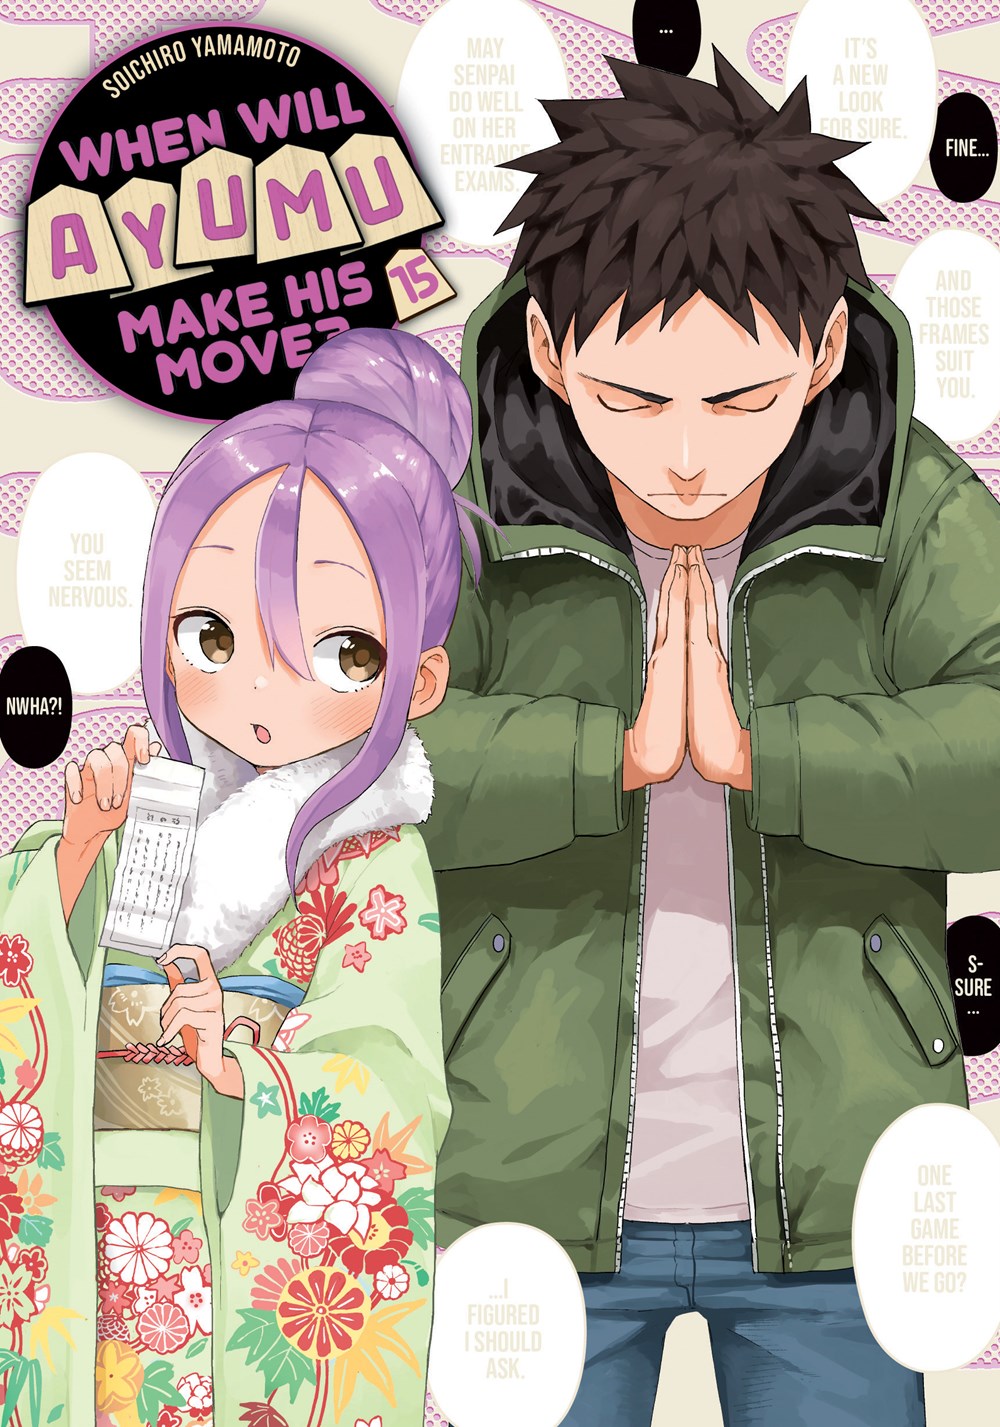 When Will Ayumu Make His Move? 1 Manga eBook by Soichiro Yamamoto - EPUB  Book